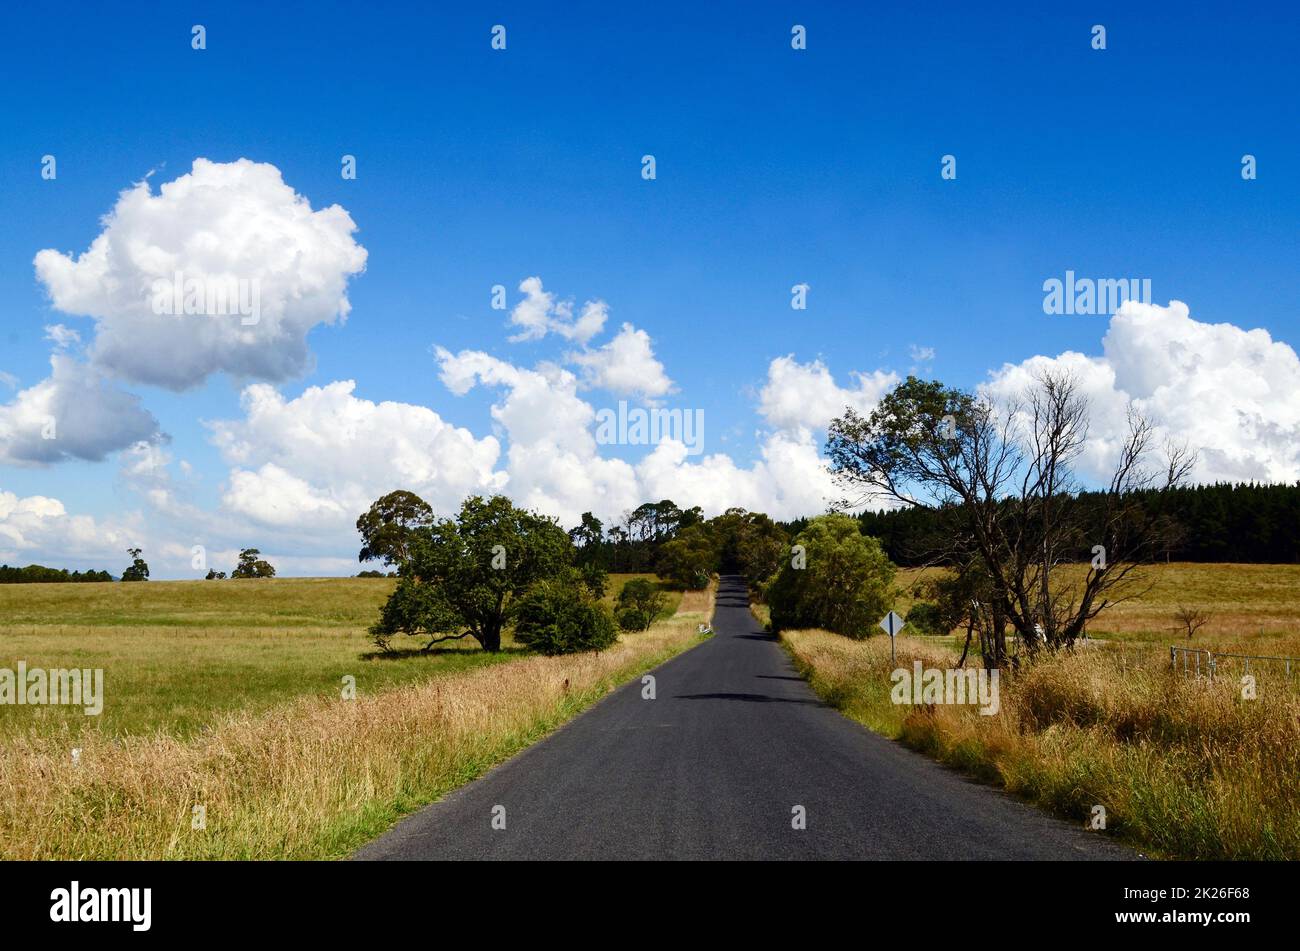 A road in rural Australia Stock Photo